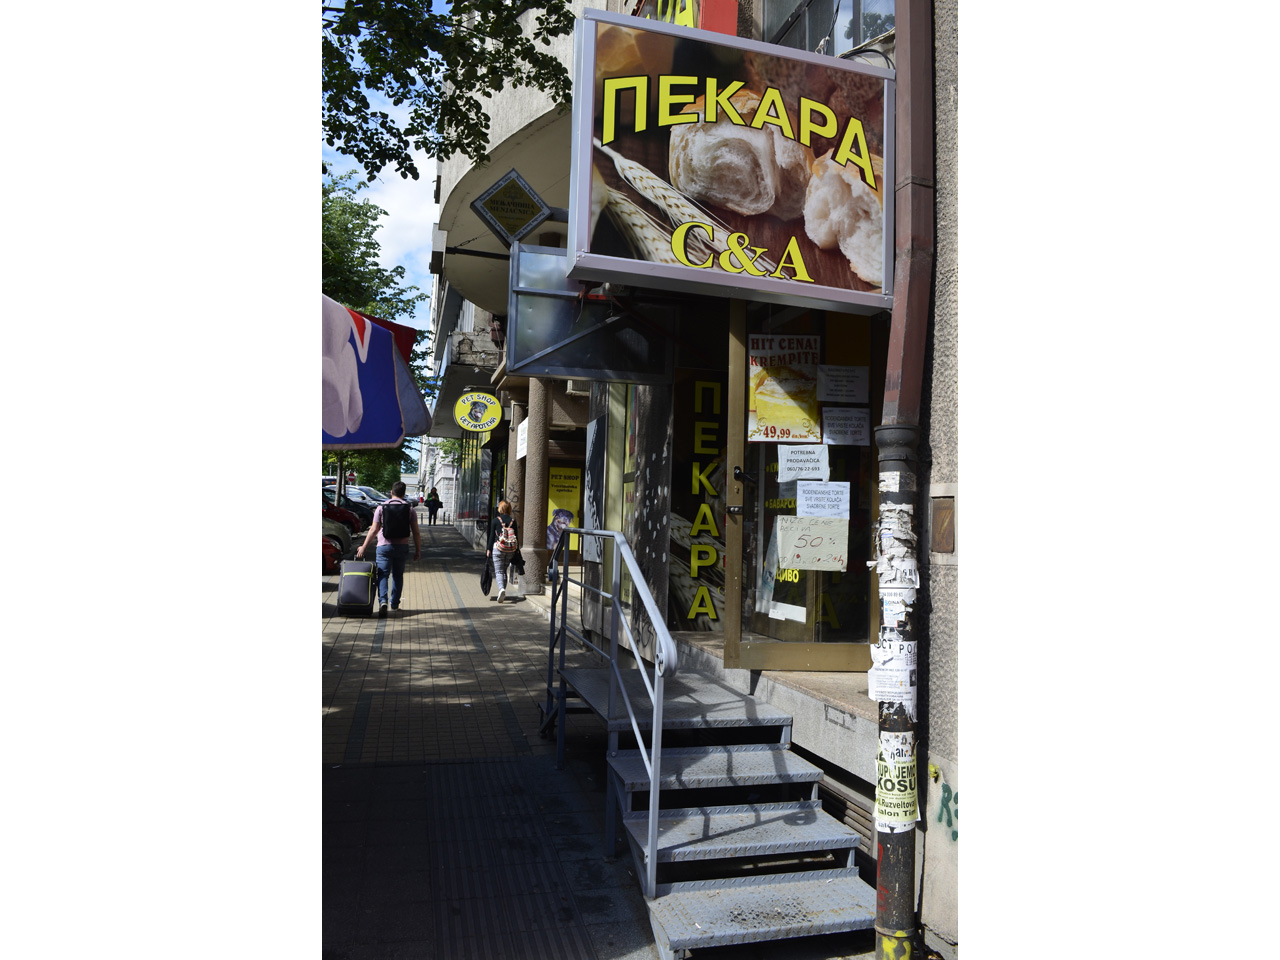 PEKARA S&A Pekare Beograd - Slika 1